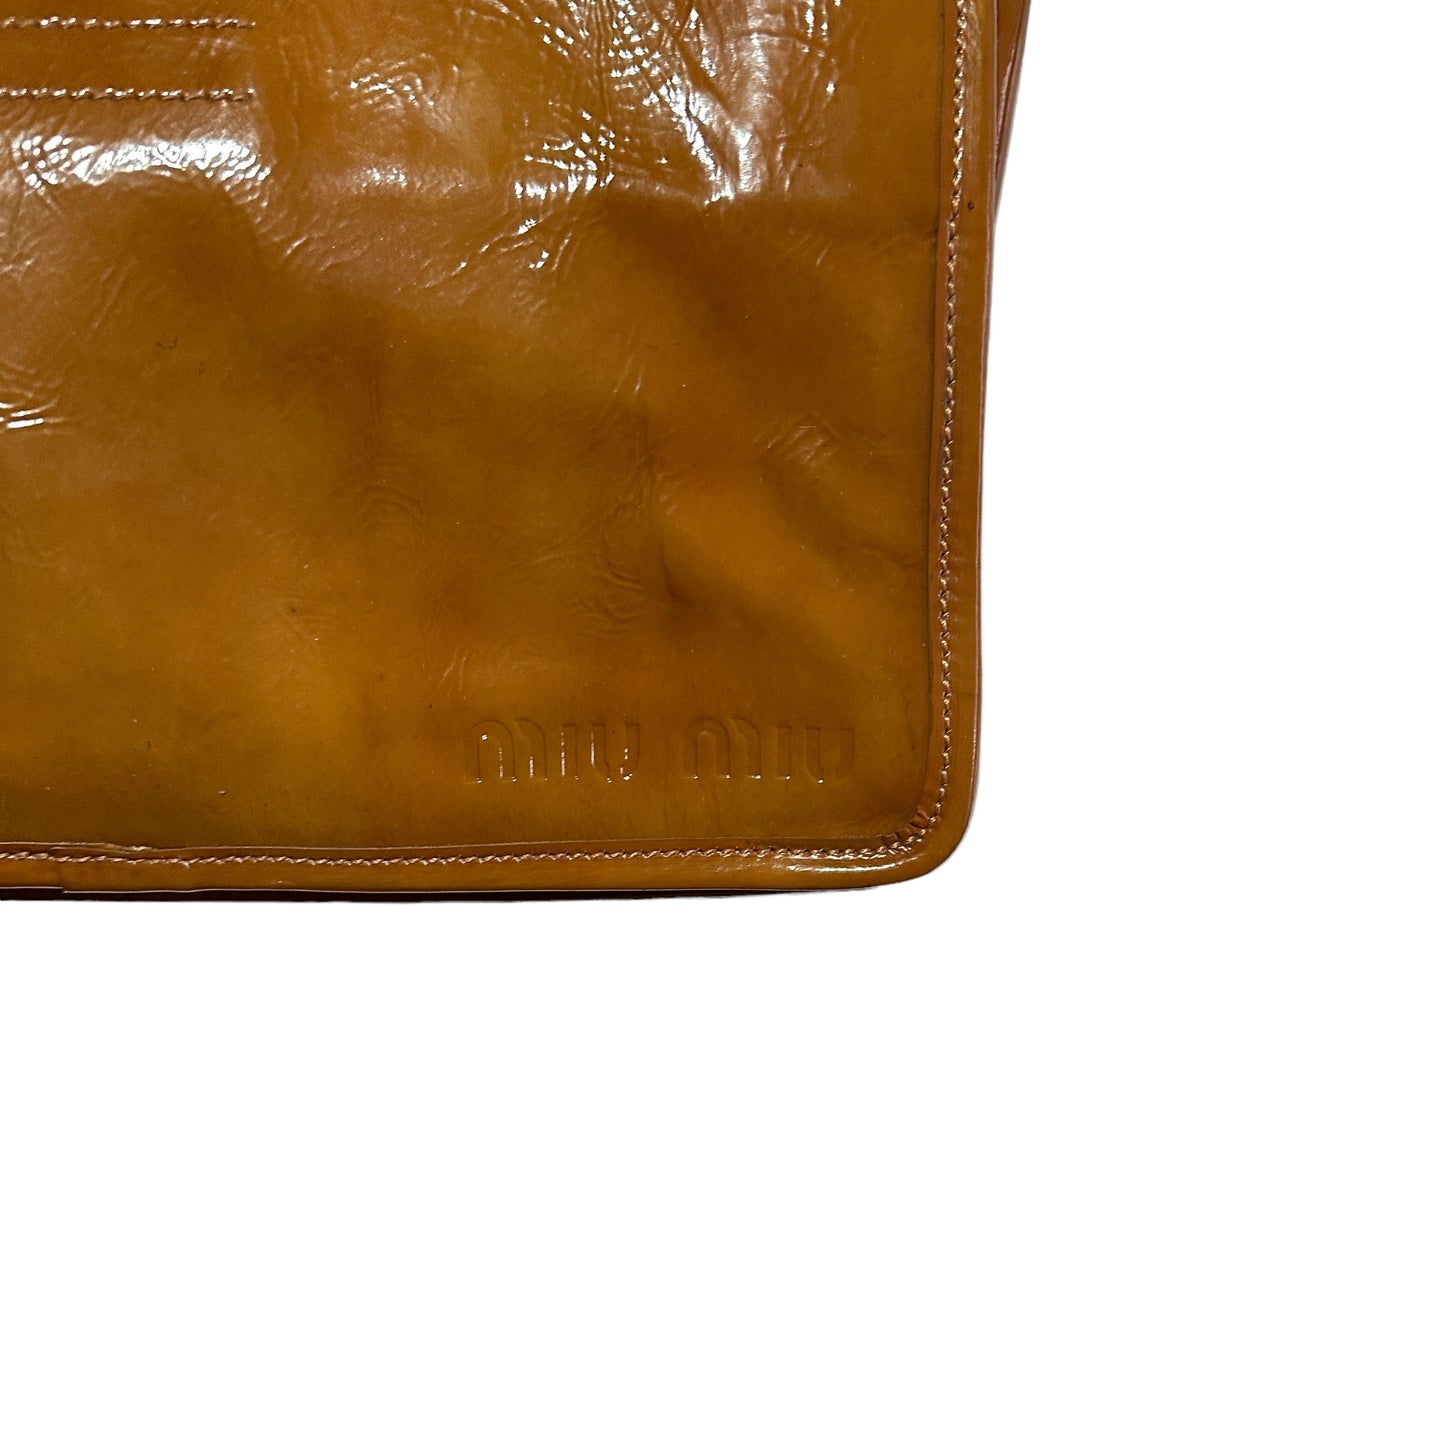 FW 1999 Miu Miu Patent Leather Shoulder Bag